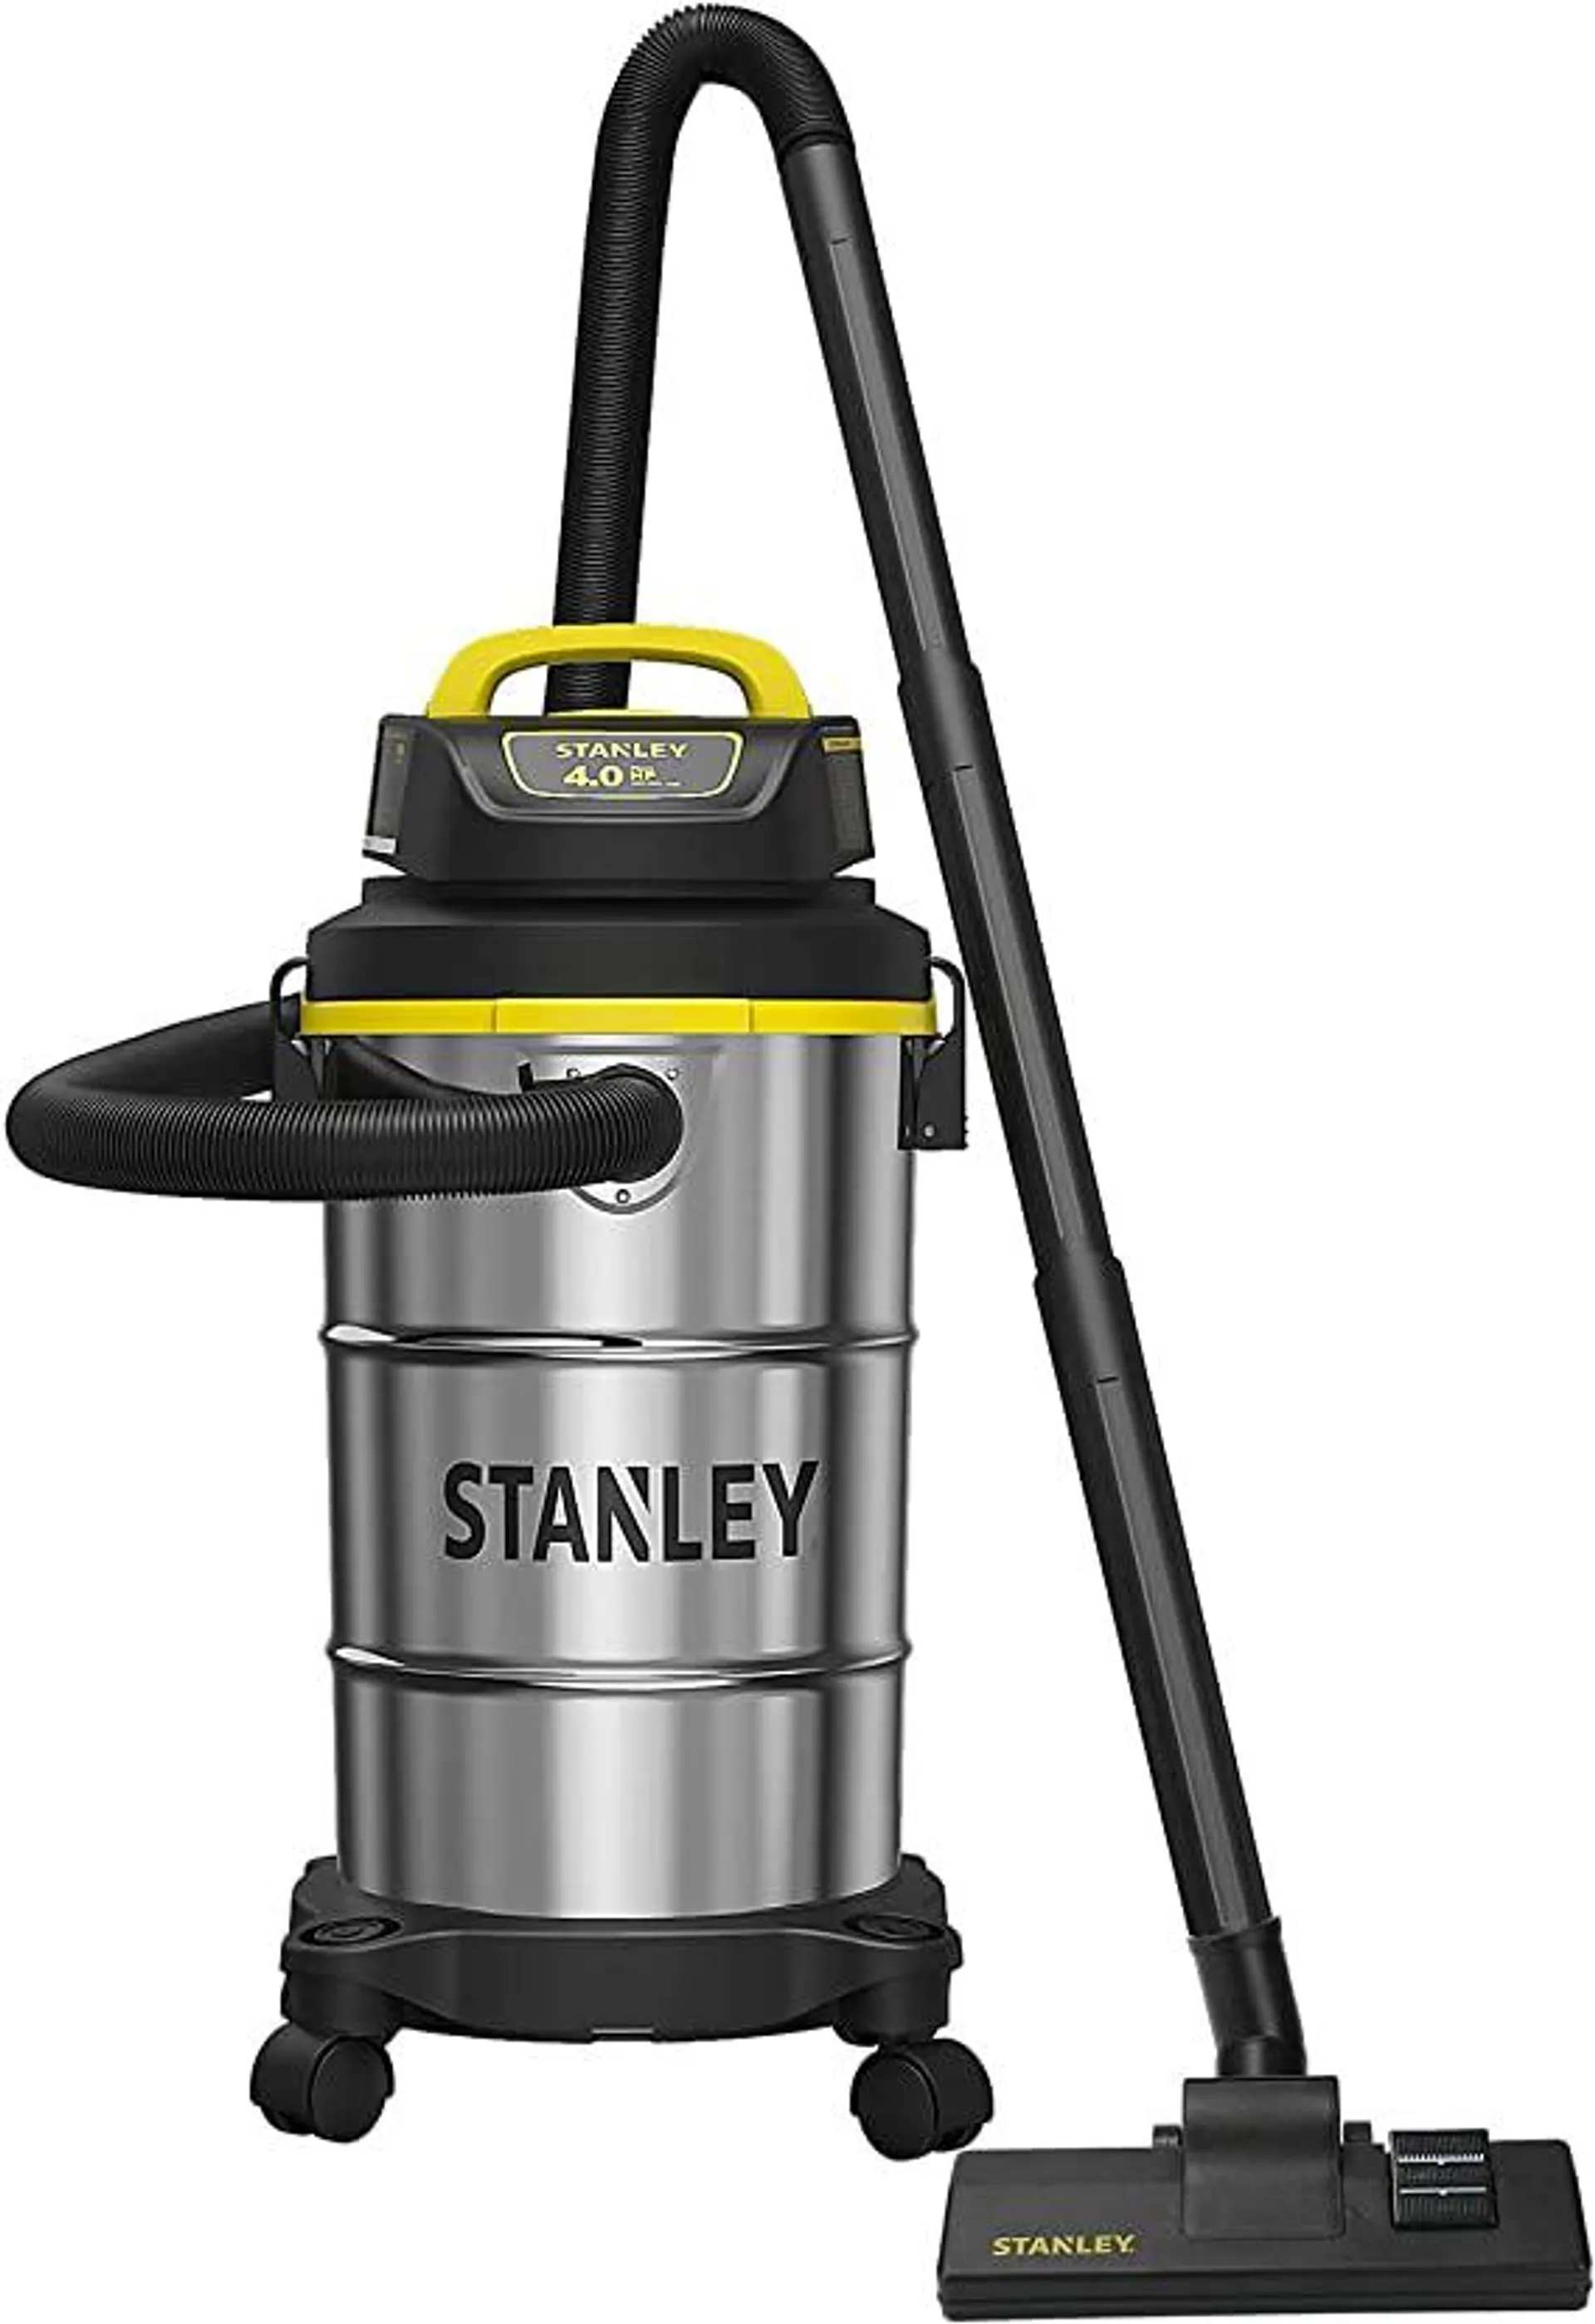 Stanley 5 Gallon Wet Dry Vacuum, Powerful 4 Peak HP Motor, Stainless Steel Tank, Ideal for Home, Garage, Job Site, Outdoor, Model: SL18130